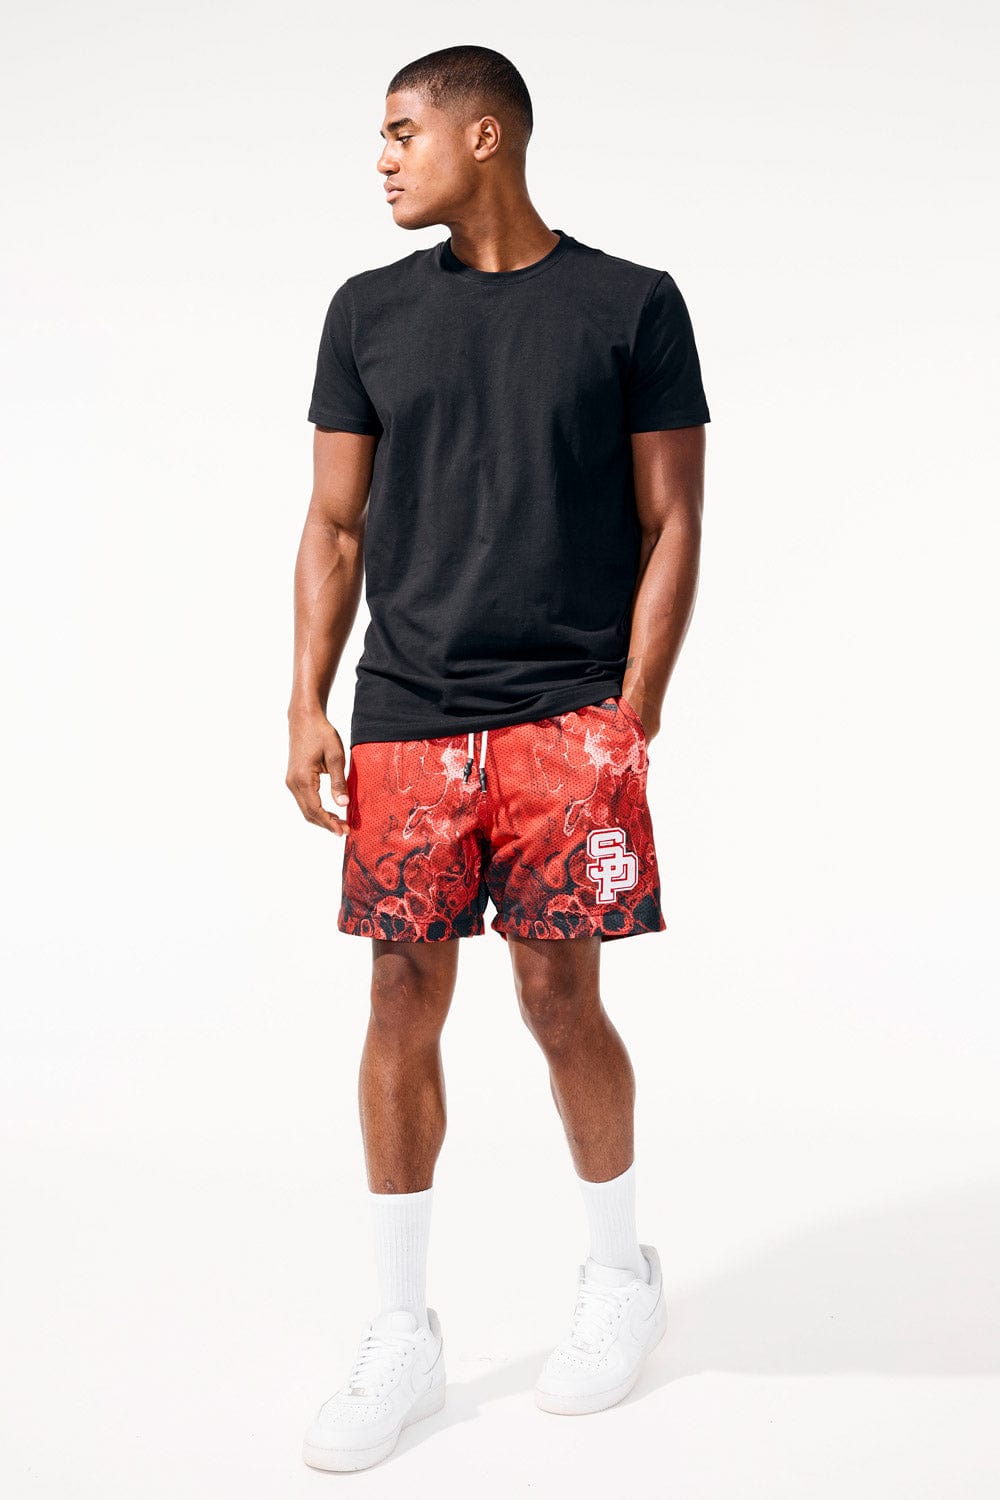 Jordan Craig Athletic - Marbled Mesh Shorts (Chicago)